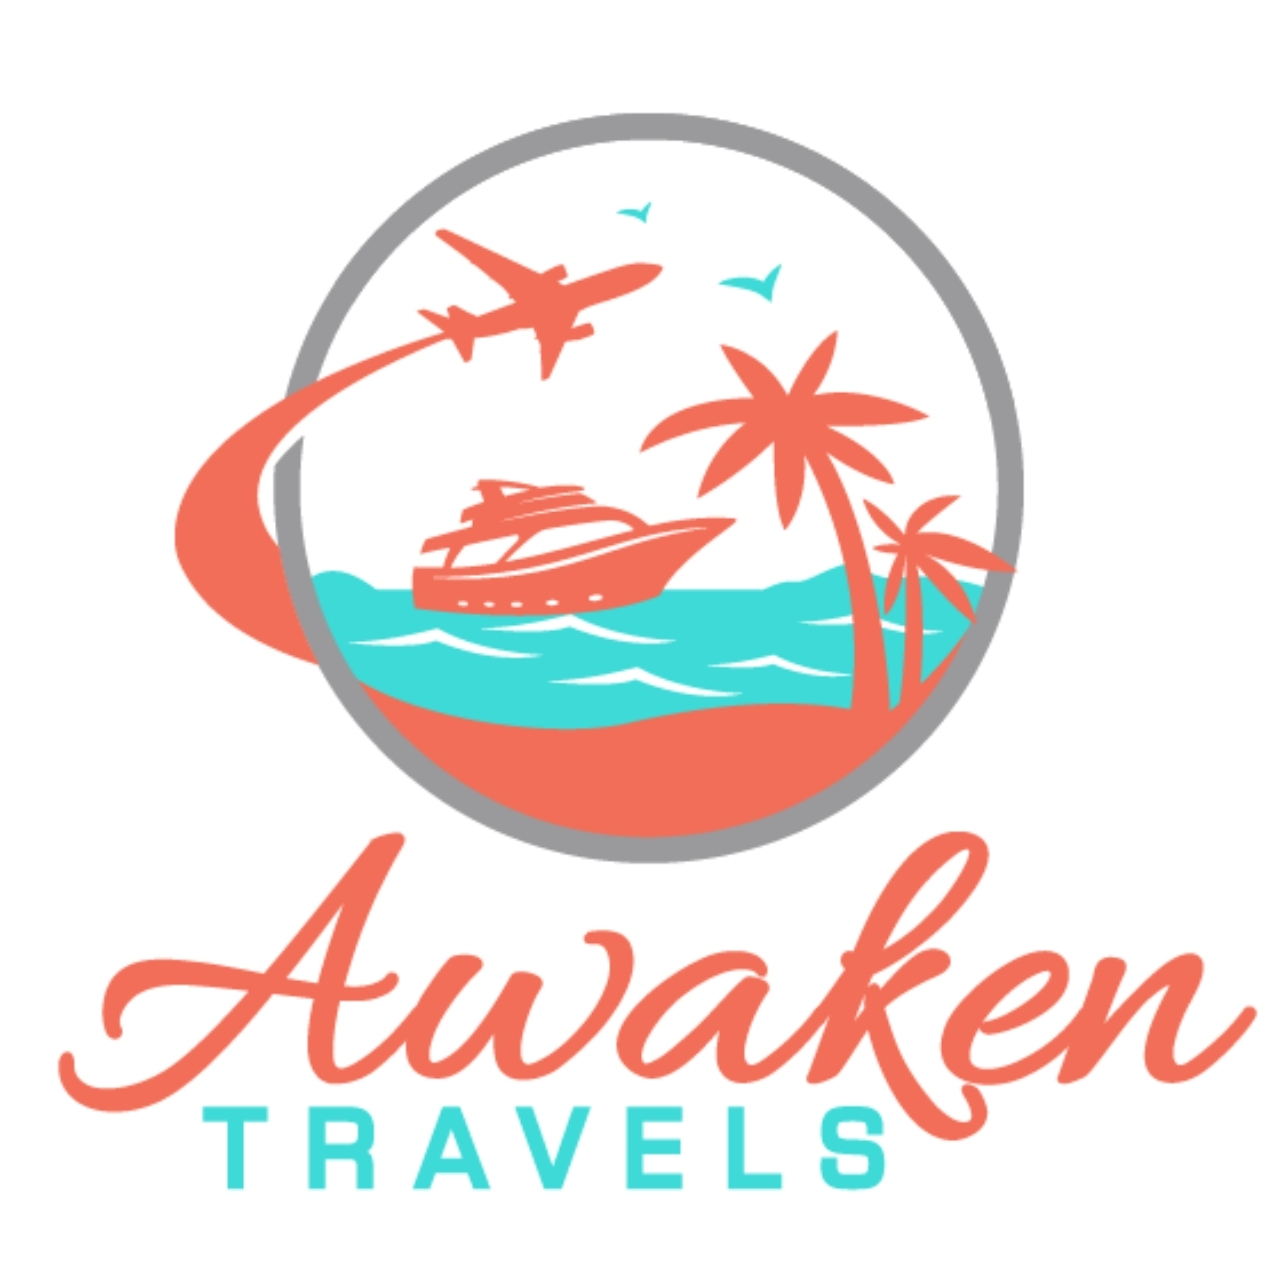 Awaken Travels